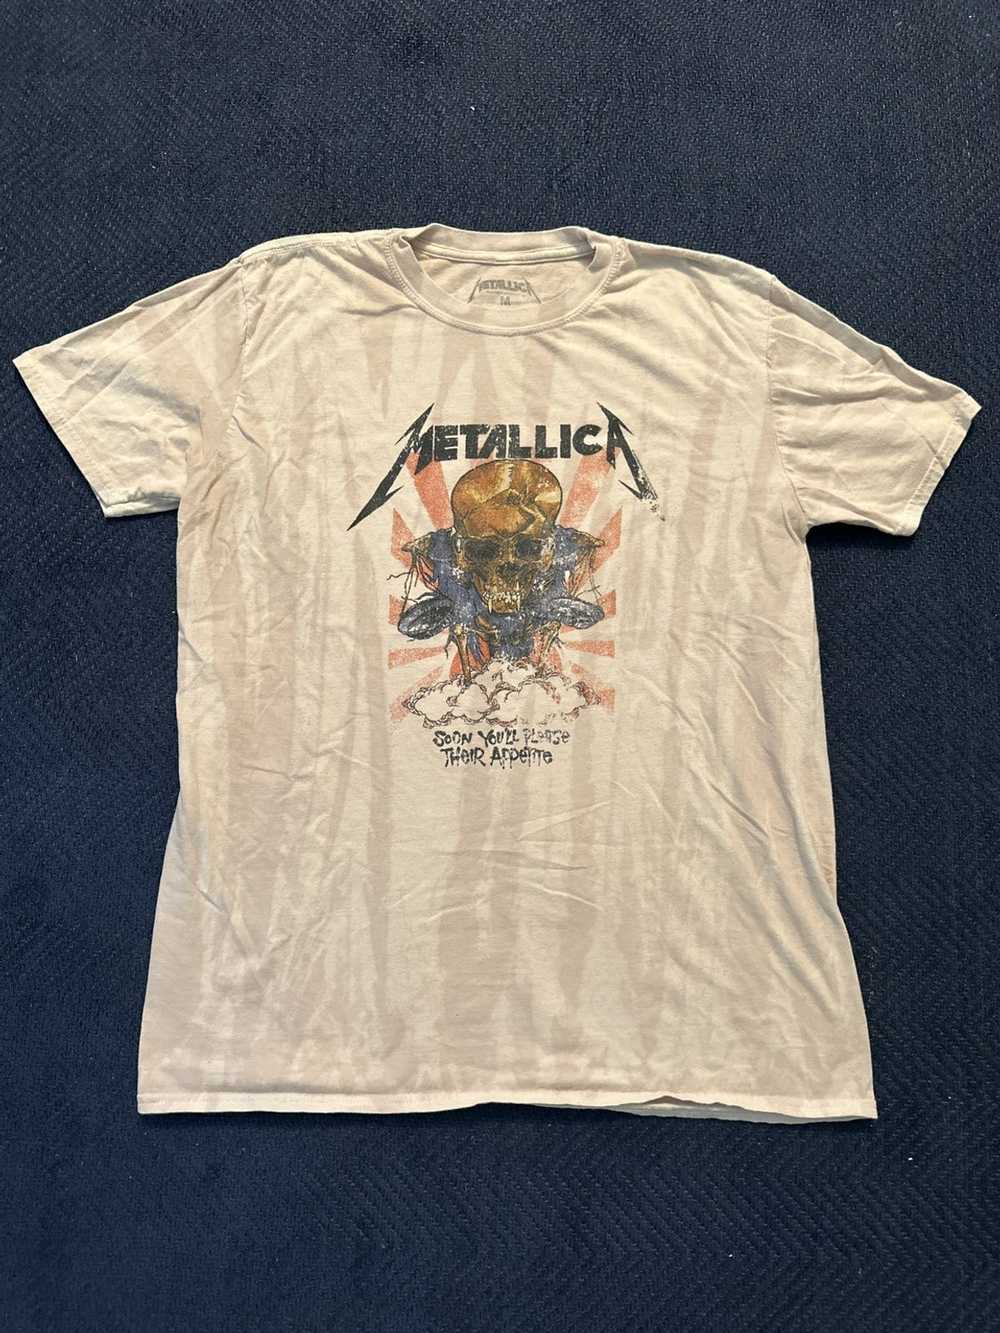 Metallica Jersey – Melbourne Vintage